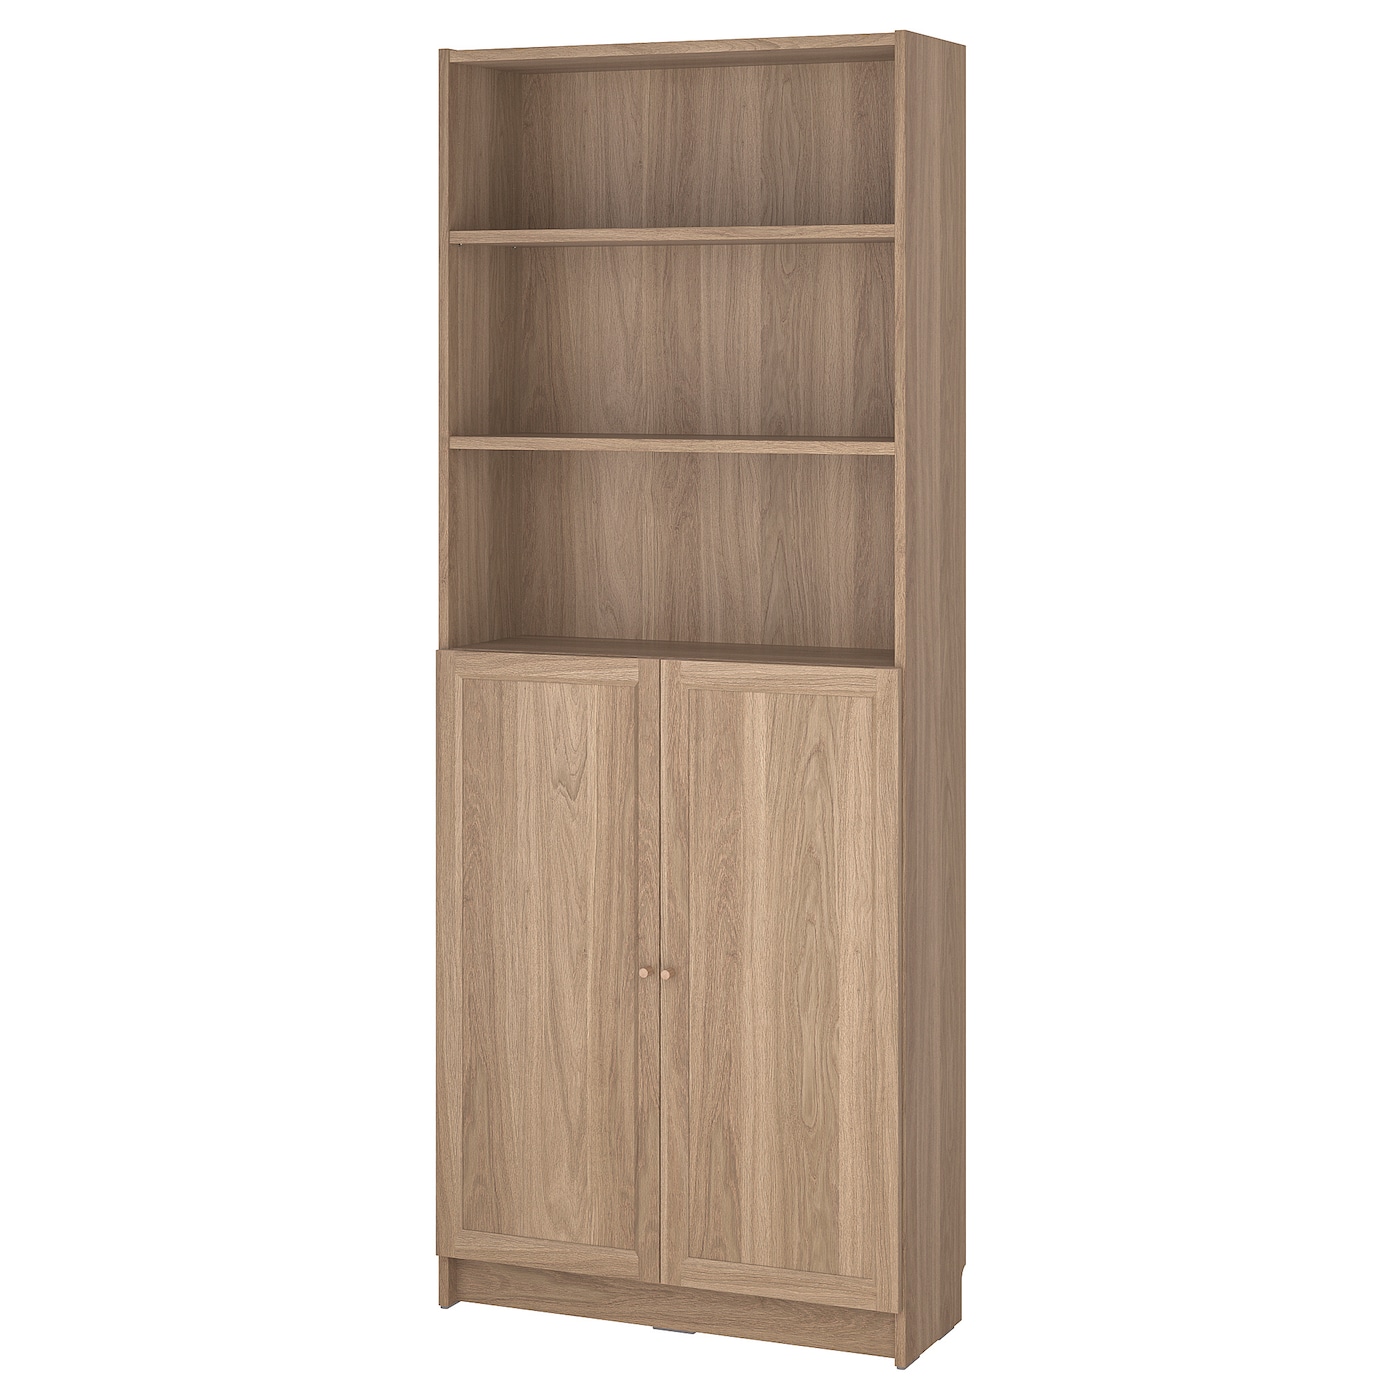 Книжный шкаф -  BILLY / OXBERG IKEA/ БИЛЛИ/ ОКСБЕРГ ИКЕА, под беленый дуб